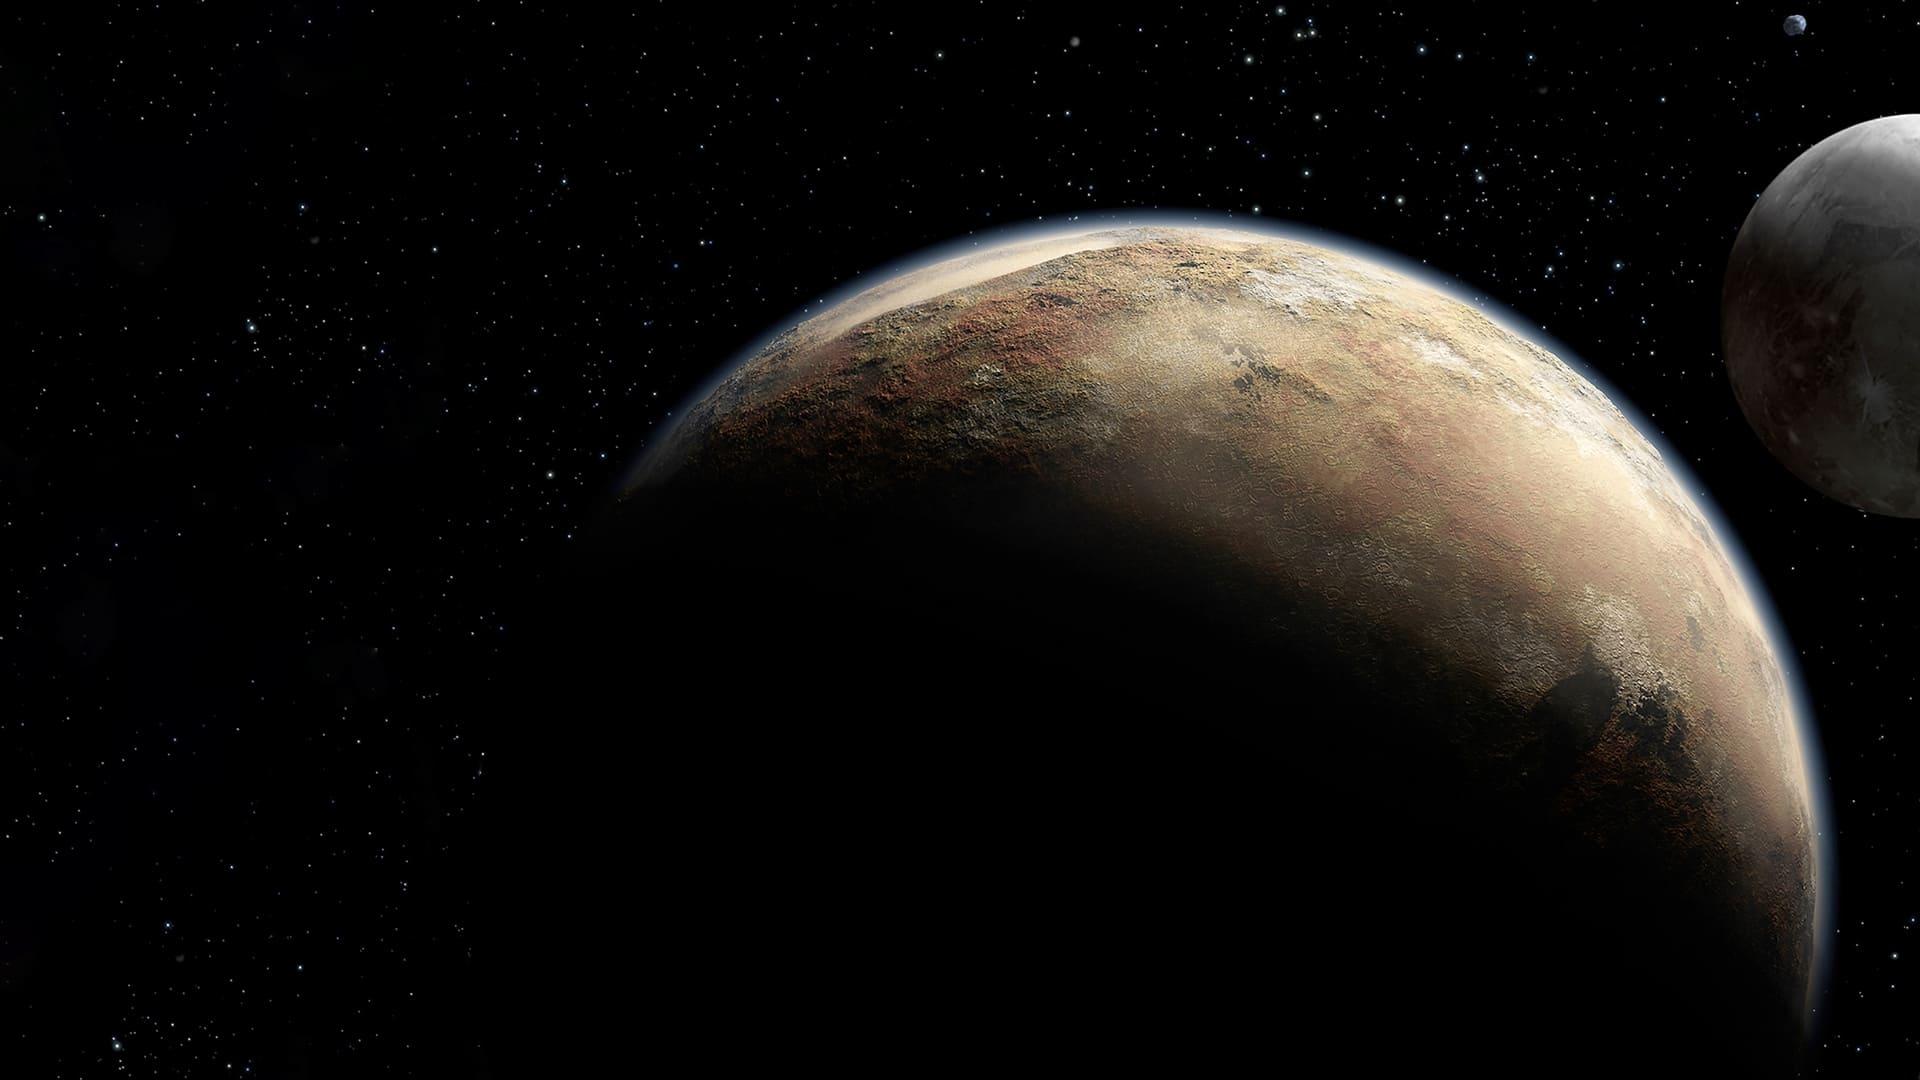 Mission Pluto backdrop